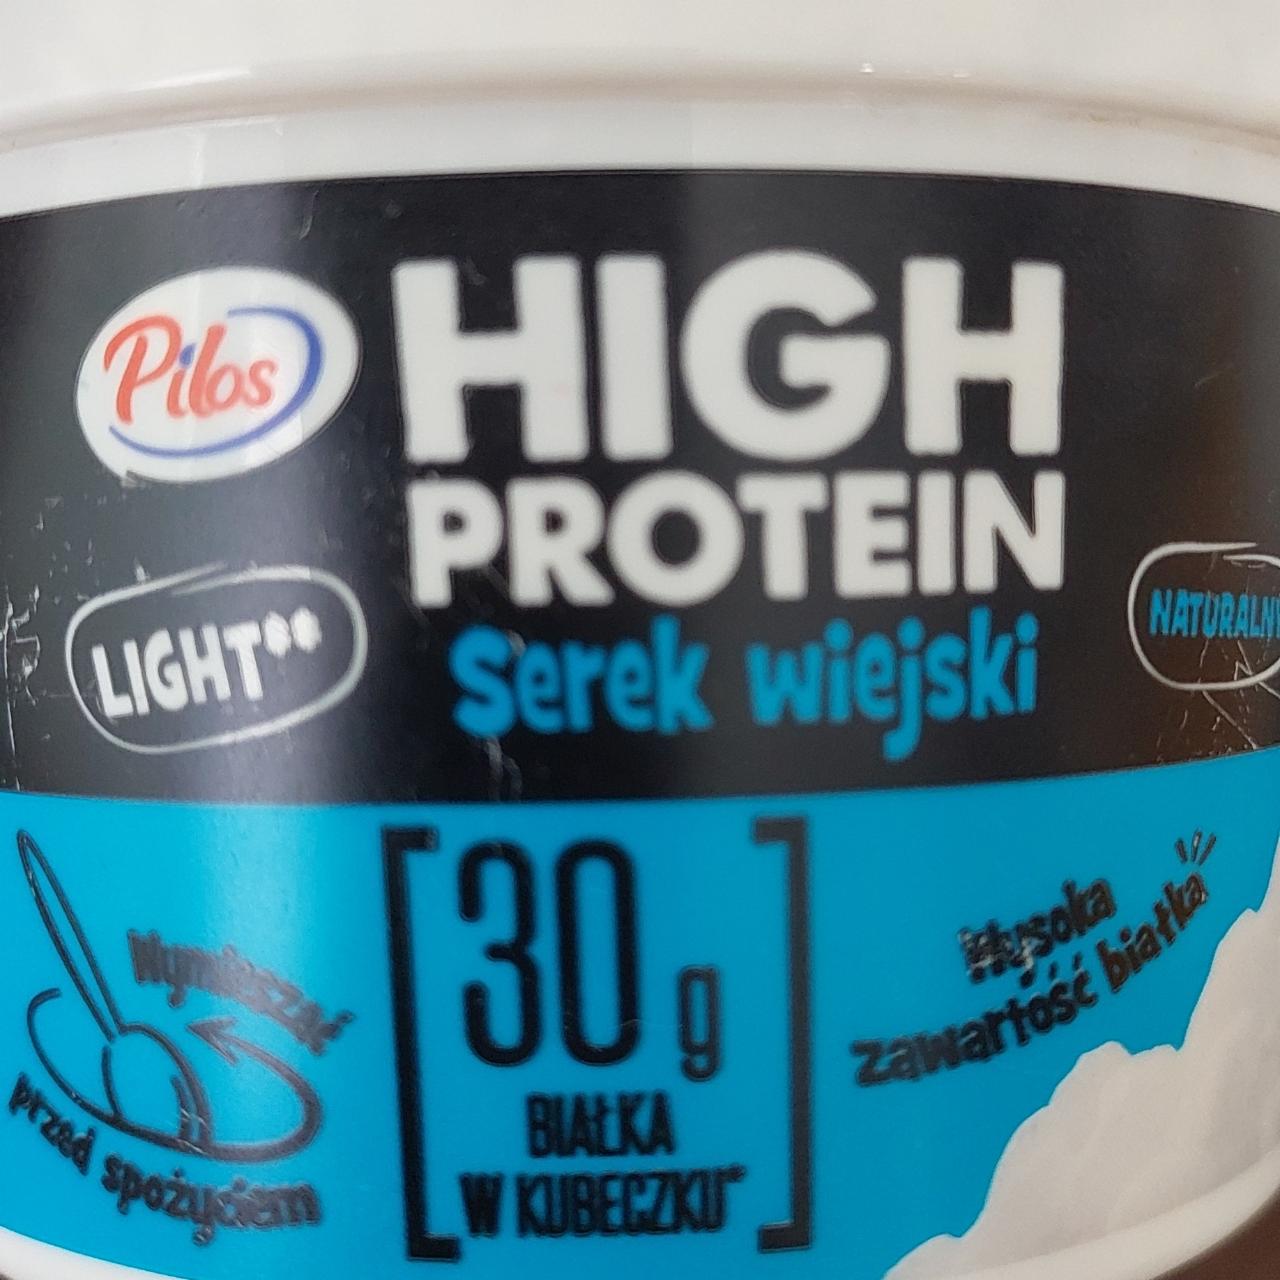 Фото - Serek wiejski Light High Protein Pilos